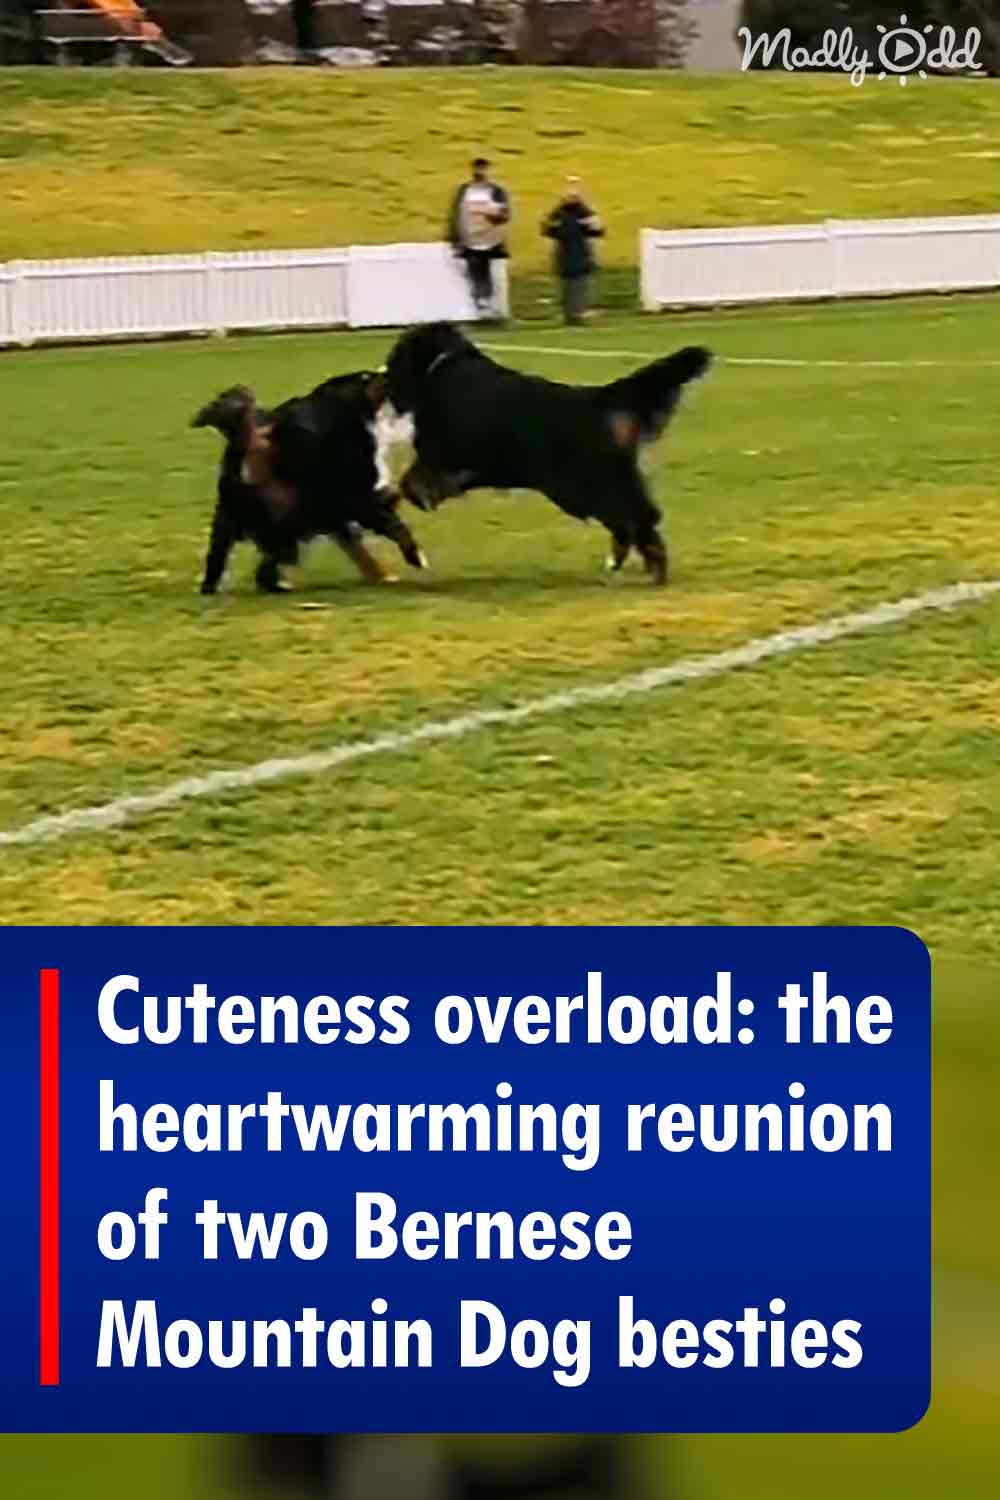 Cuteness overload: the heartwarming reunion of two Bernese Mountain Dog besties